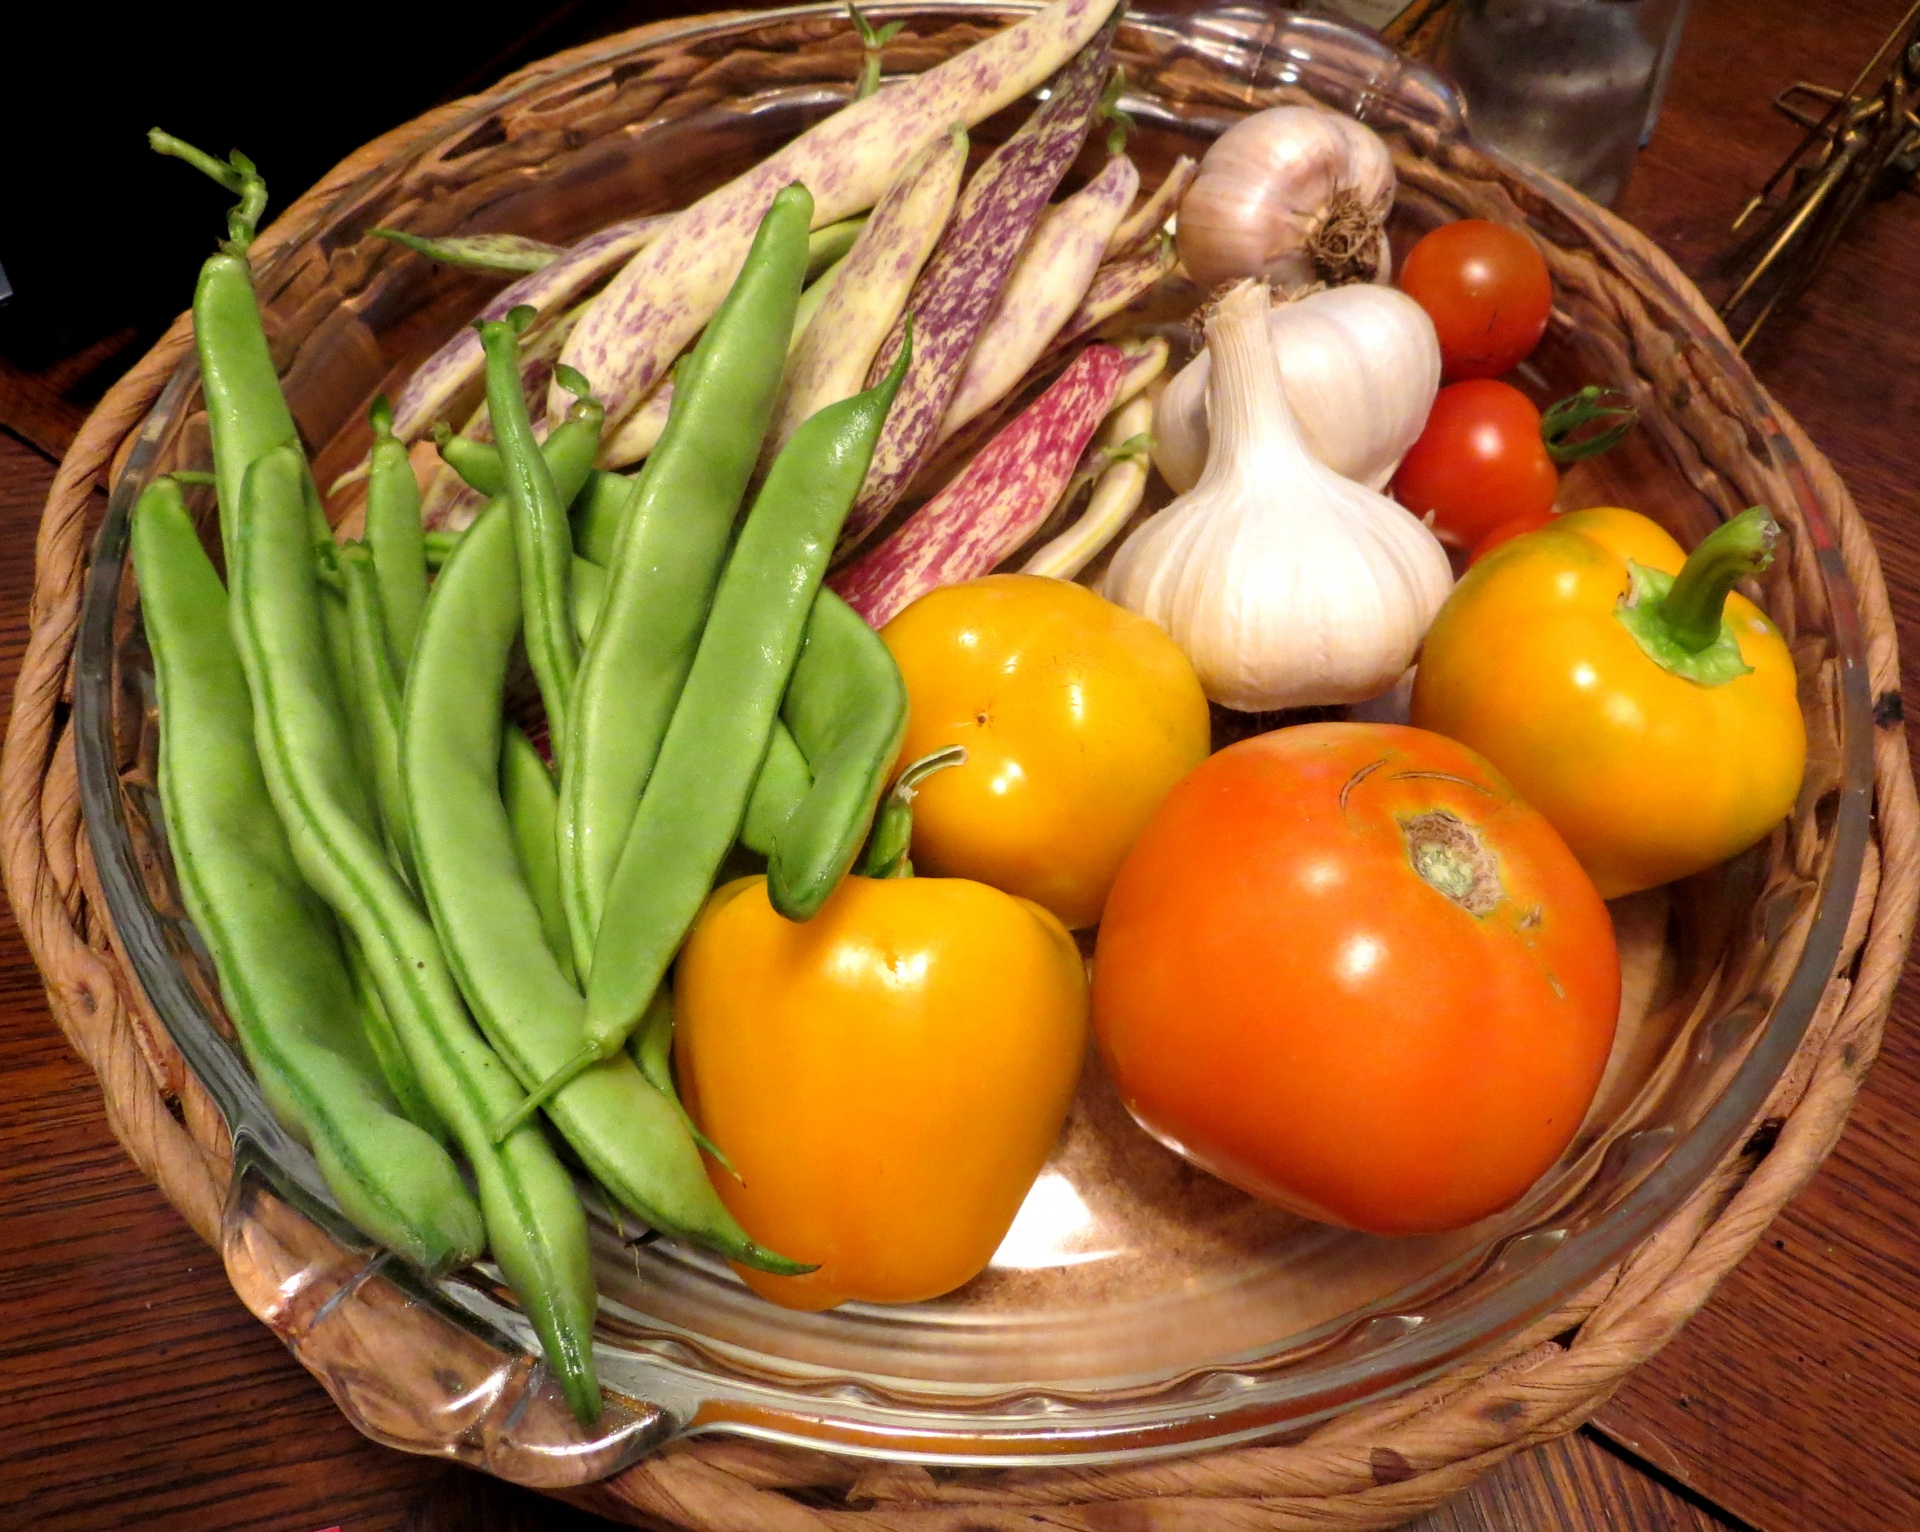 Basket Of Vegetable Produce